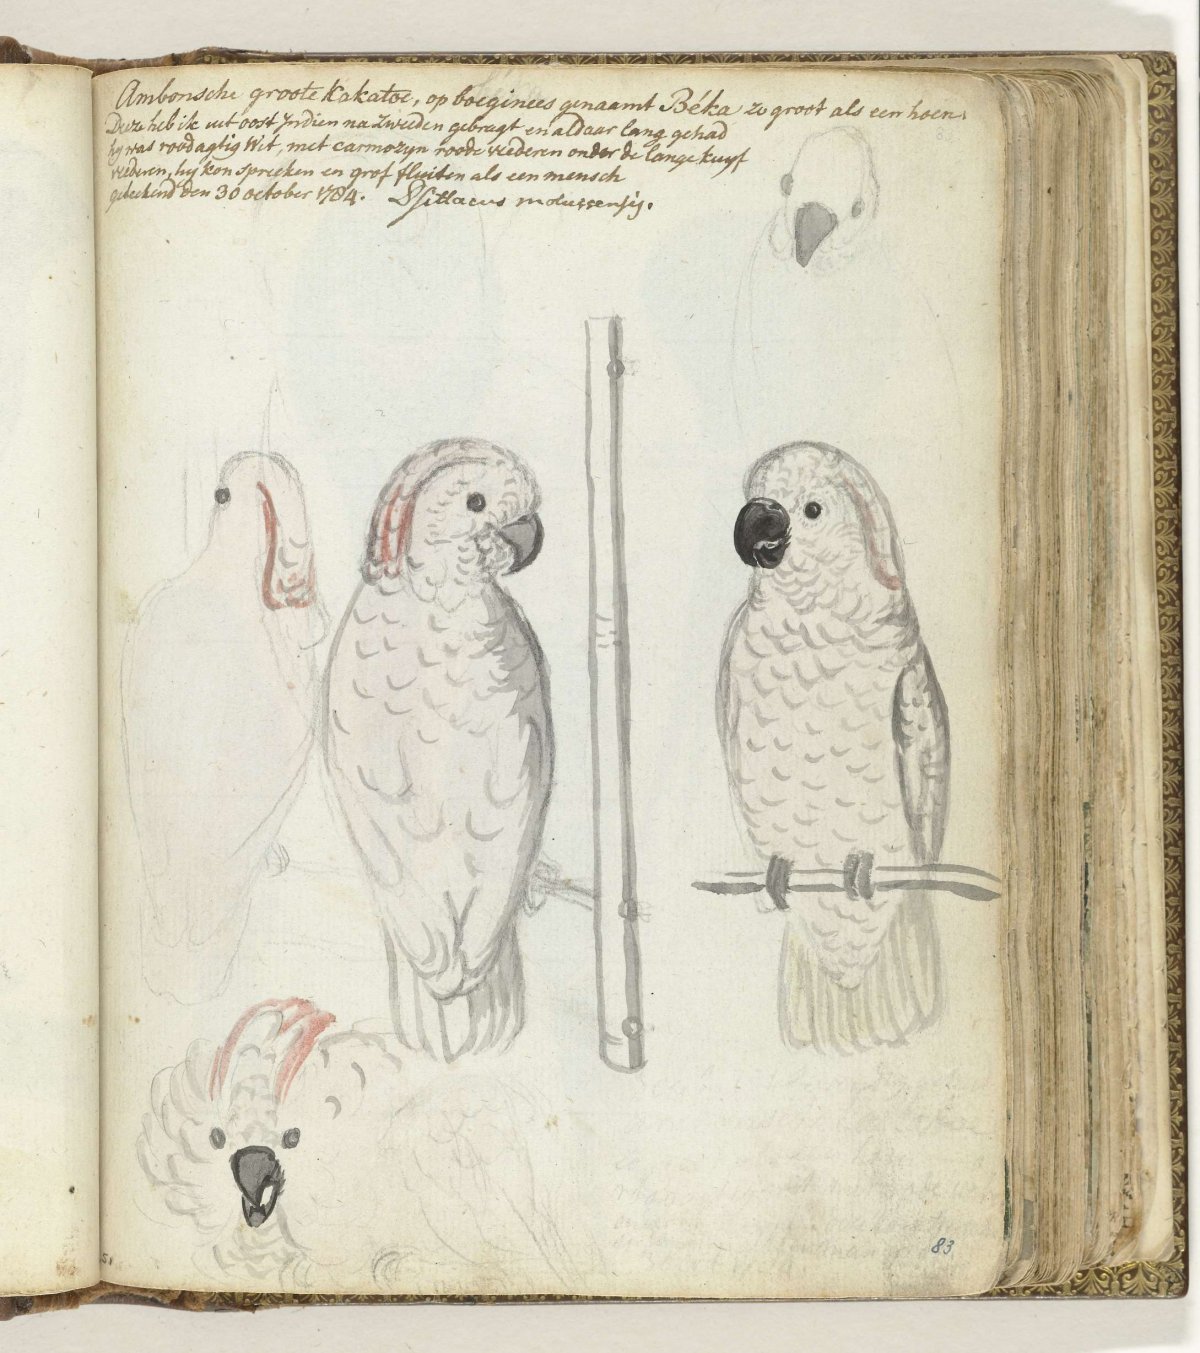 Cockatoo from Ambon, Jan Brandes, 1784